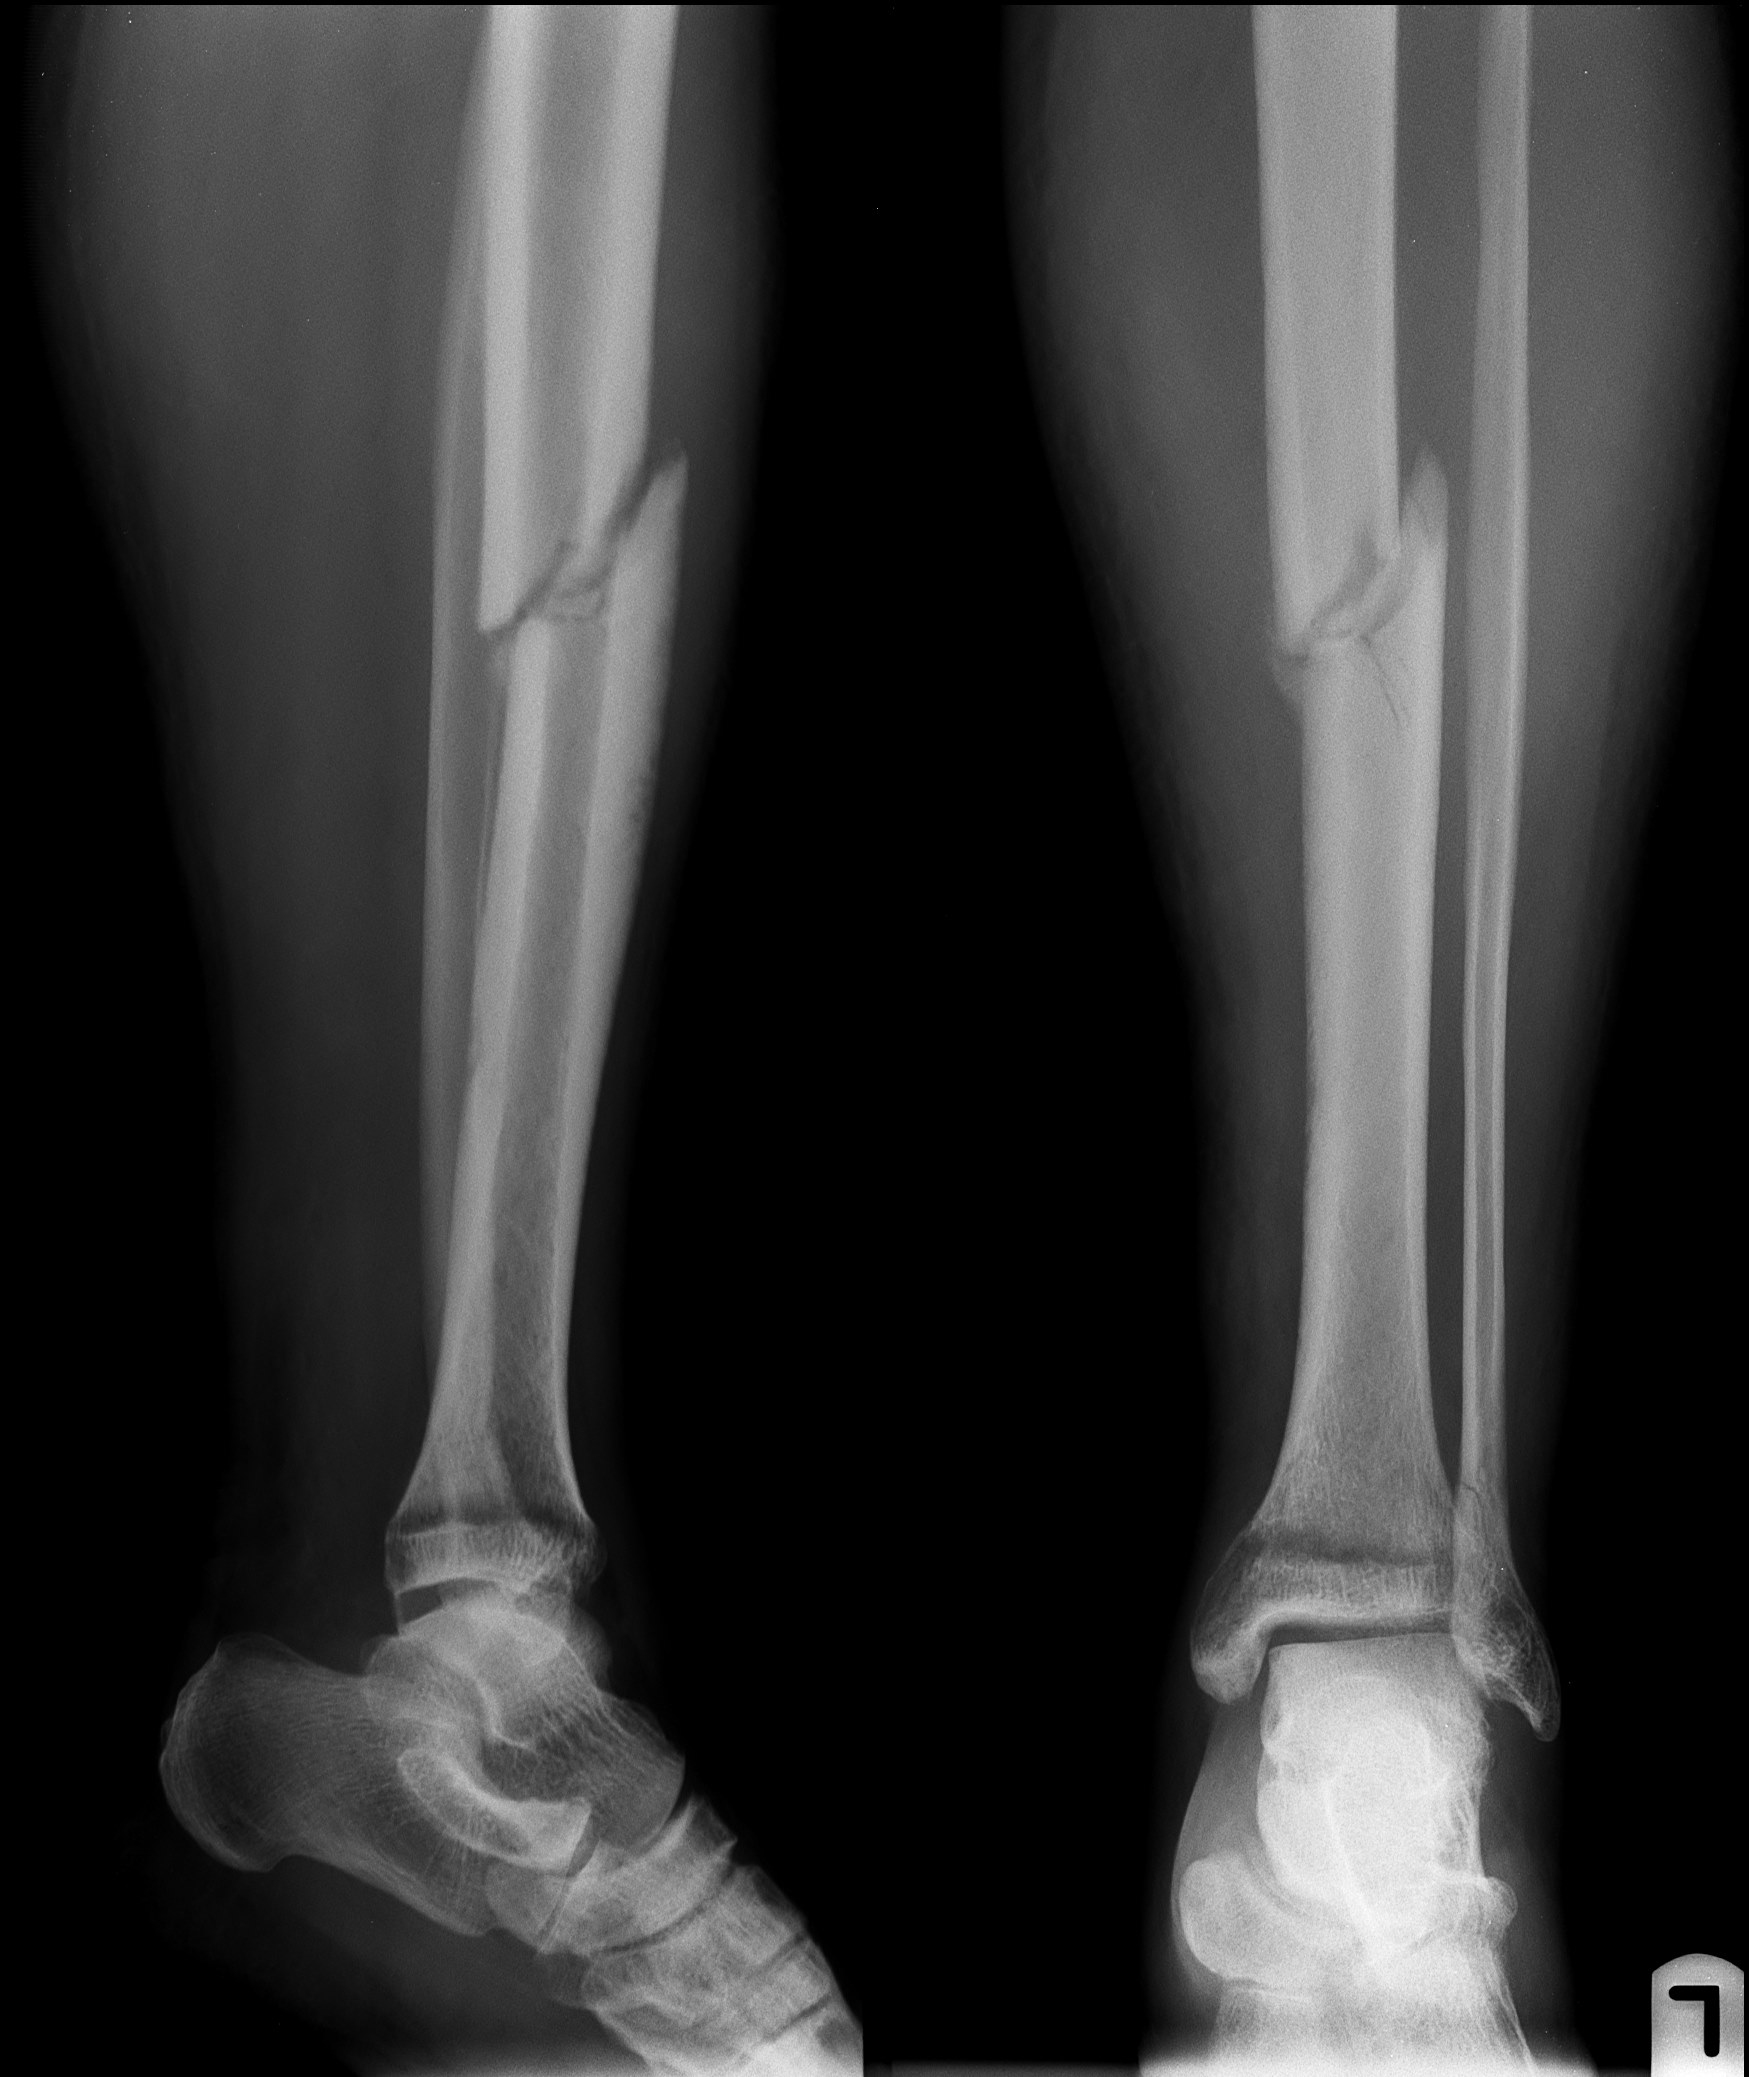 Трещина кости на ноге. Перелом берцовой кости рентген. Поперечный перелом берцовой кости. Перелом кости голени рентген. Перелом голени рентген.